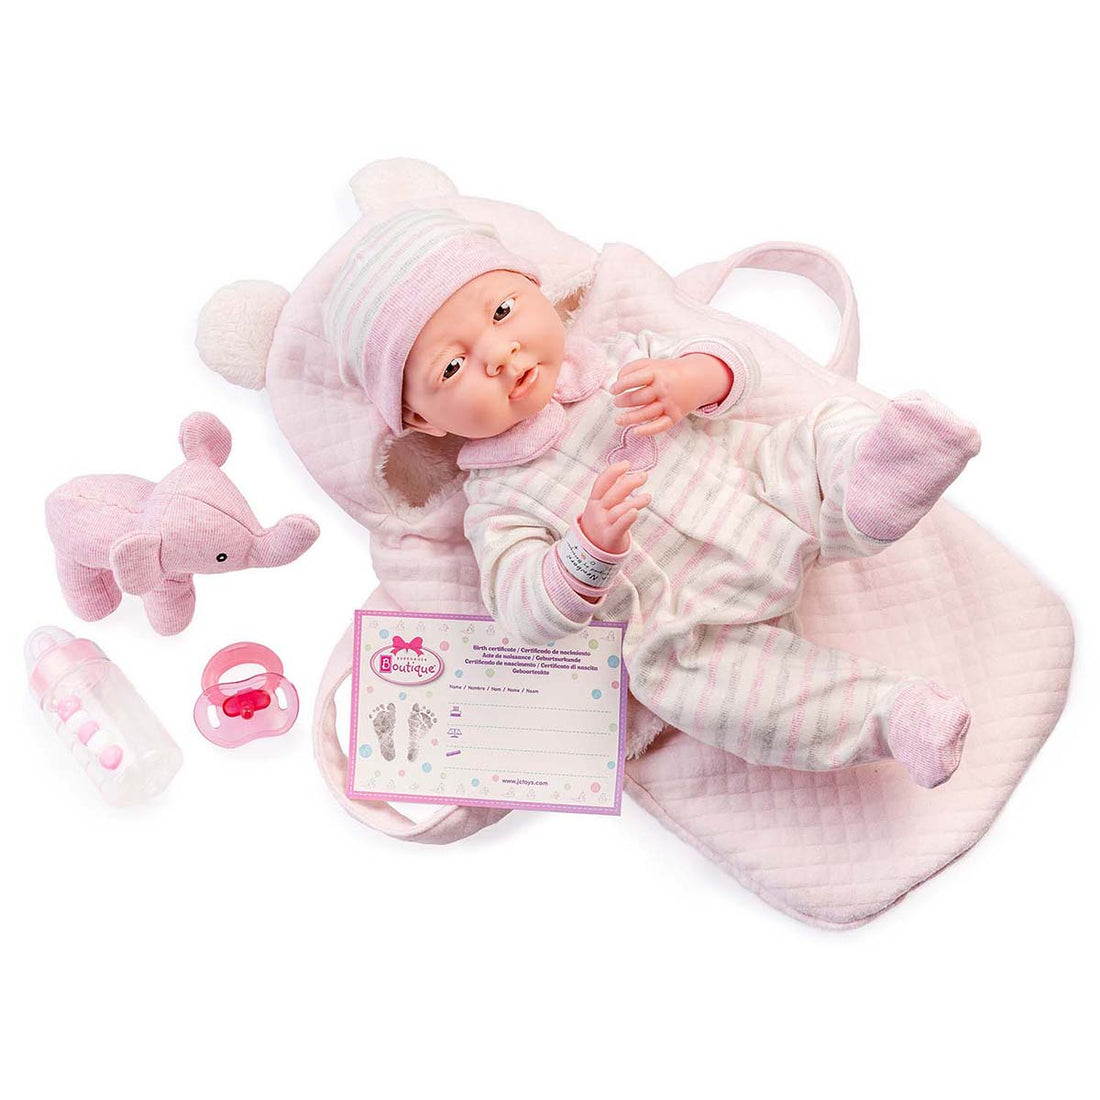 Soft Body La Newborn in Soft Carry Basket w/ Accessories - Dolls and Accessories